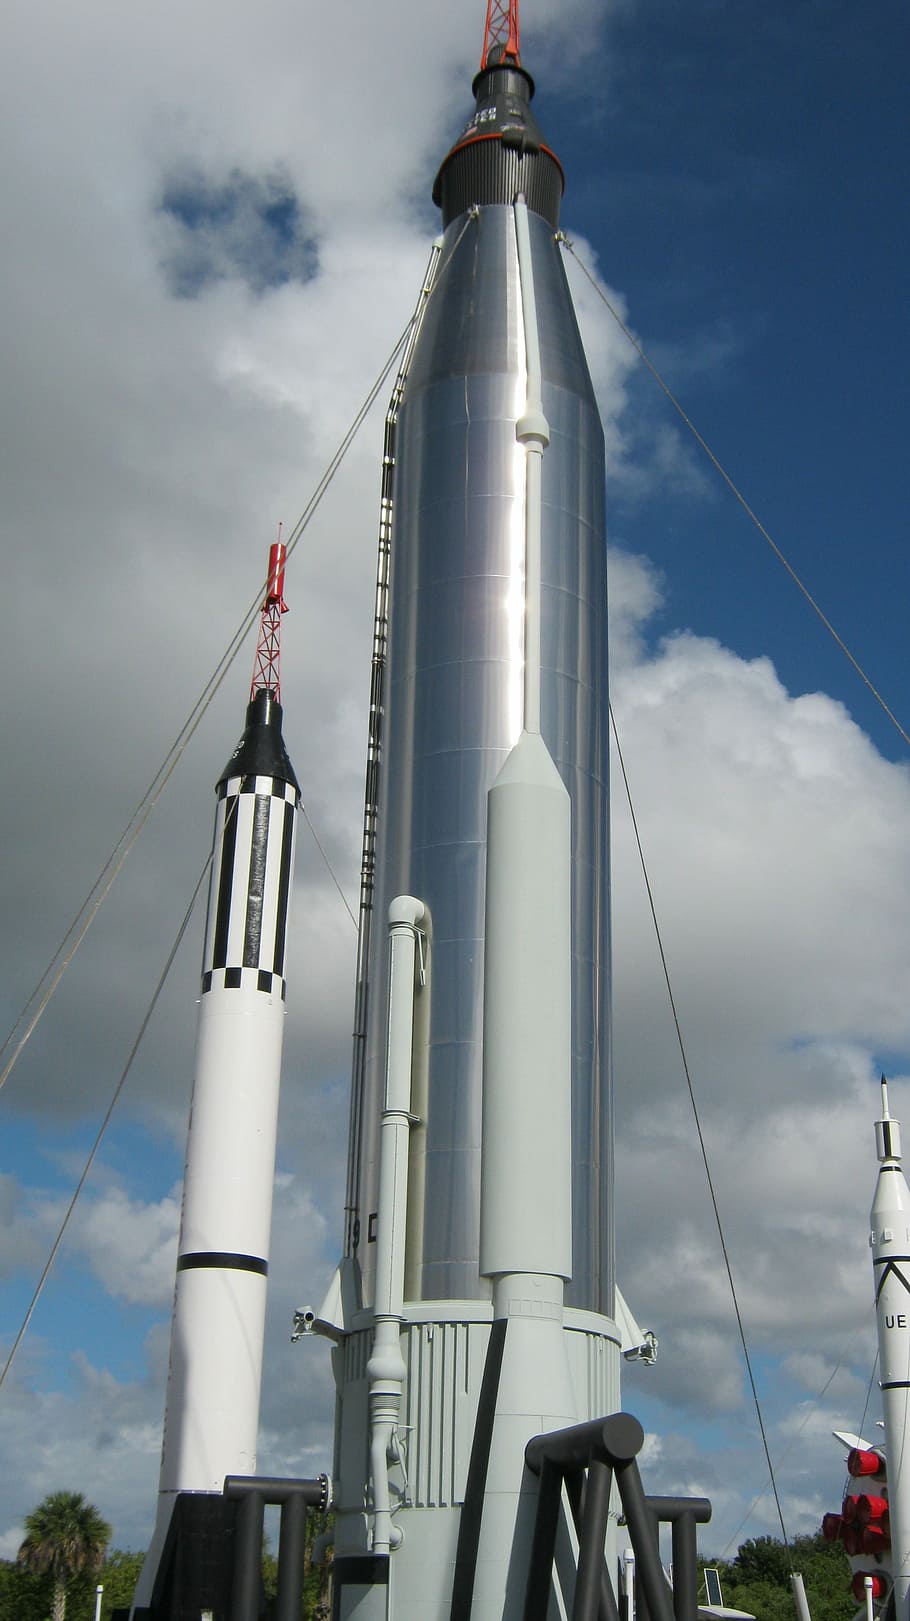 gemini rockets, Mercury, Gemini, Rockets, Space Flight, mercury and gemini rockets, nasa, industry, cloud - sky, fuel and power generation